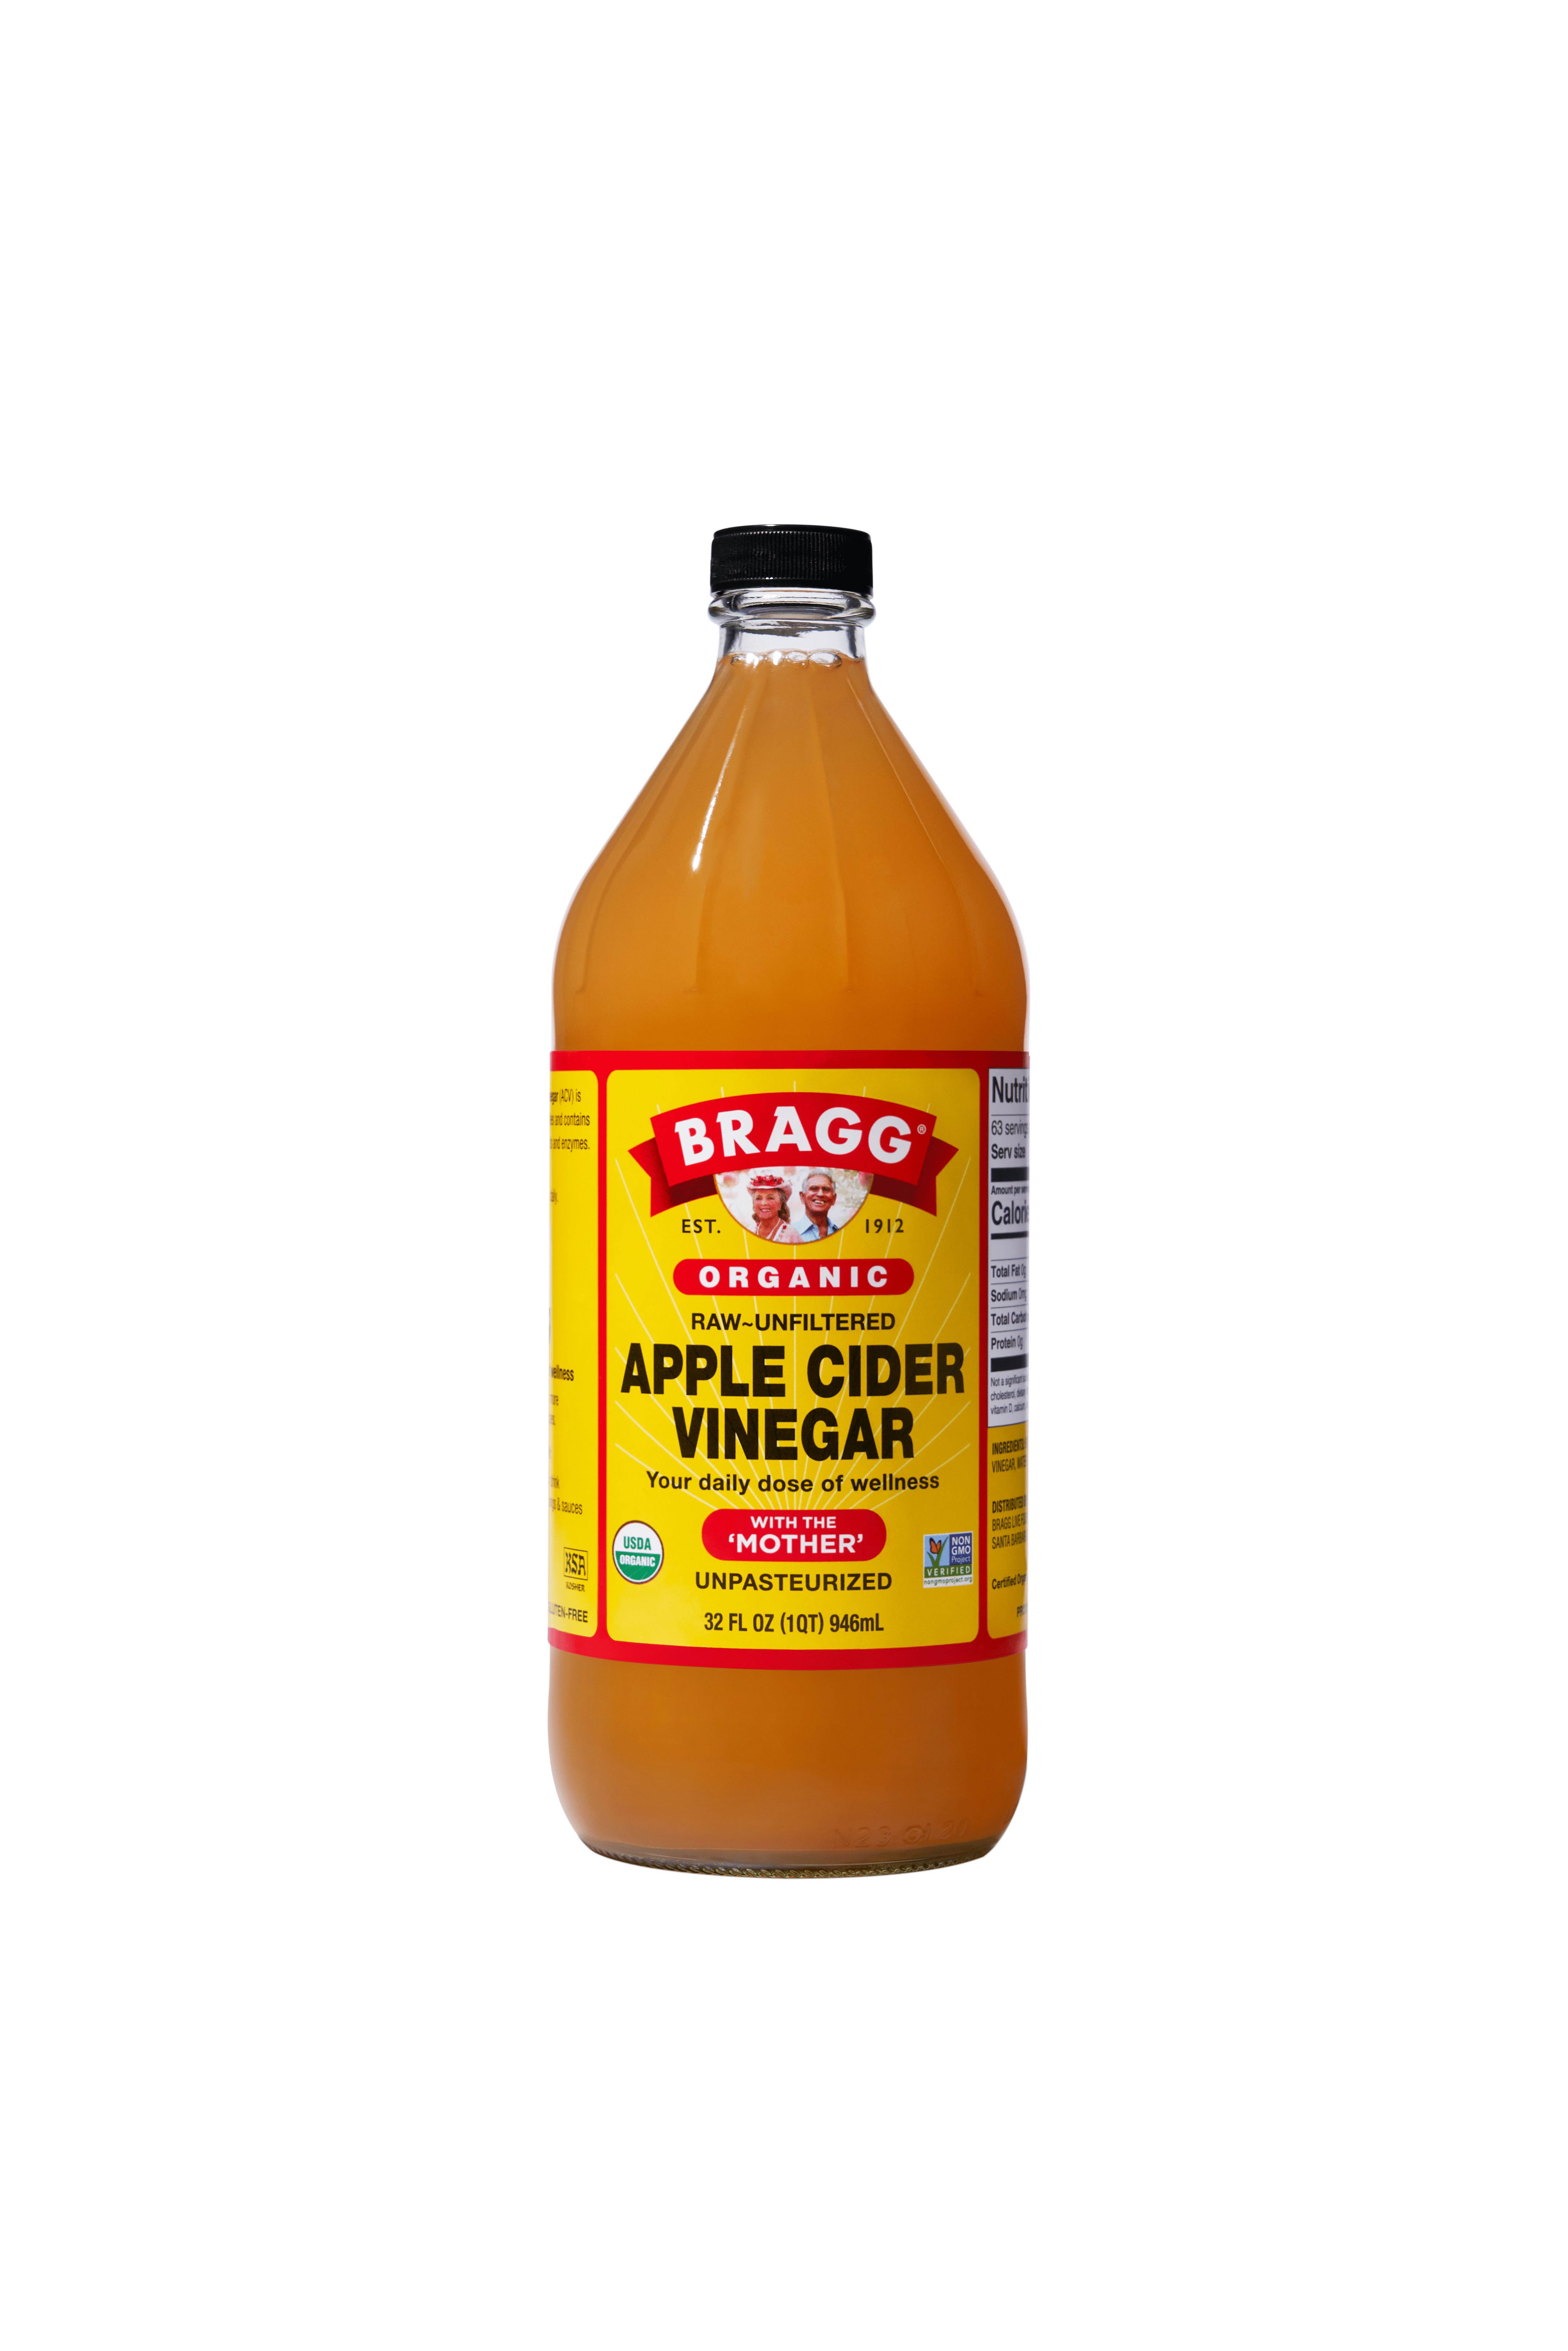 Organic Apple Cider Vinegar Gummies + Ginger – Chimes Gourmet